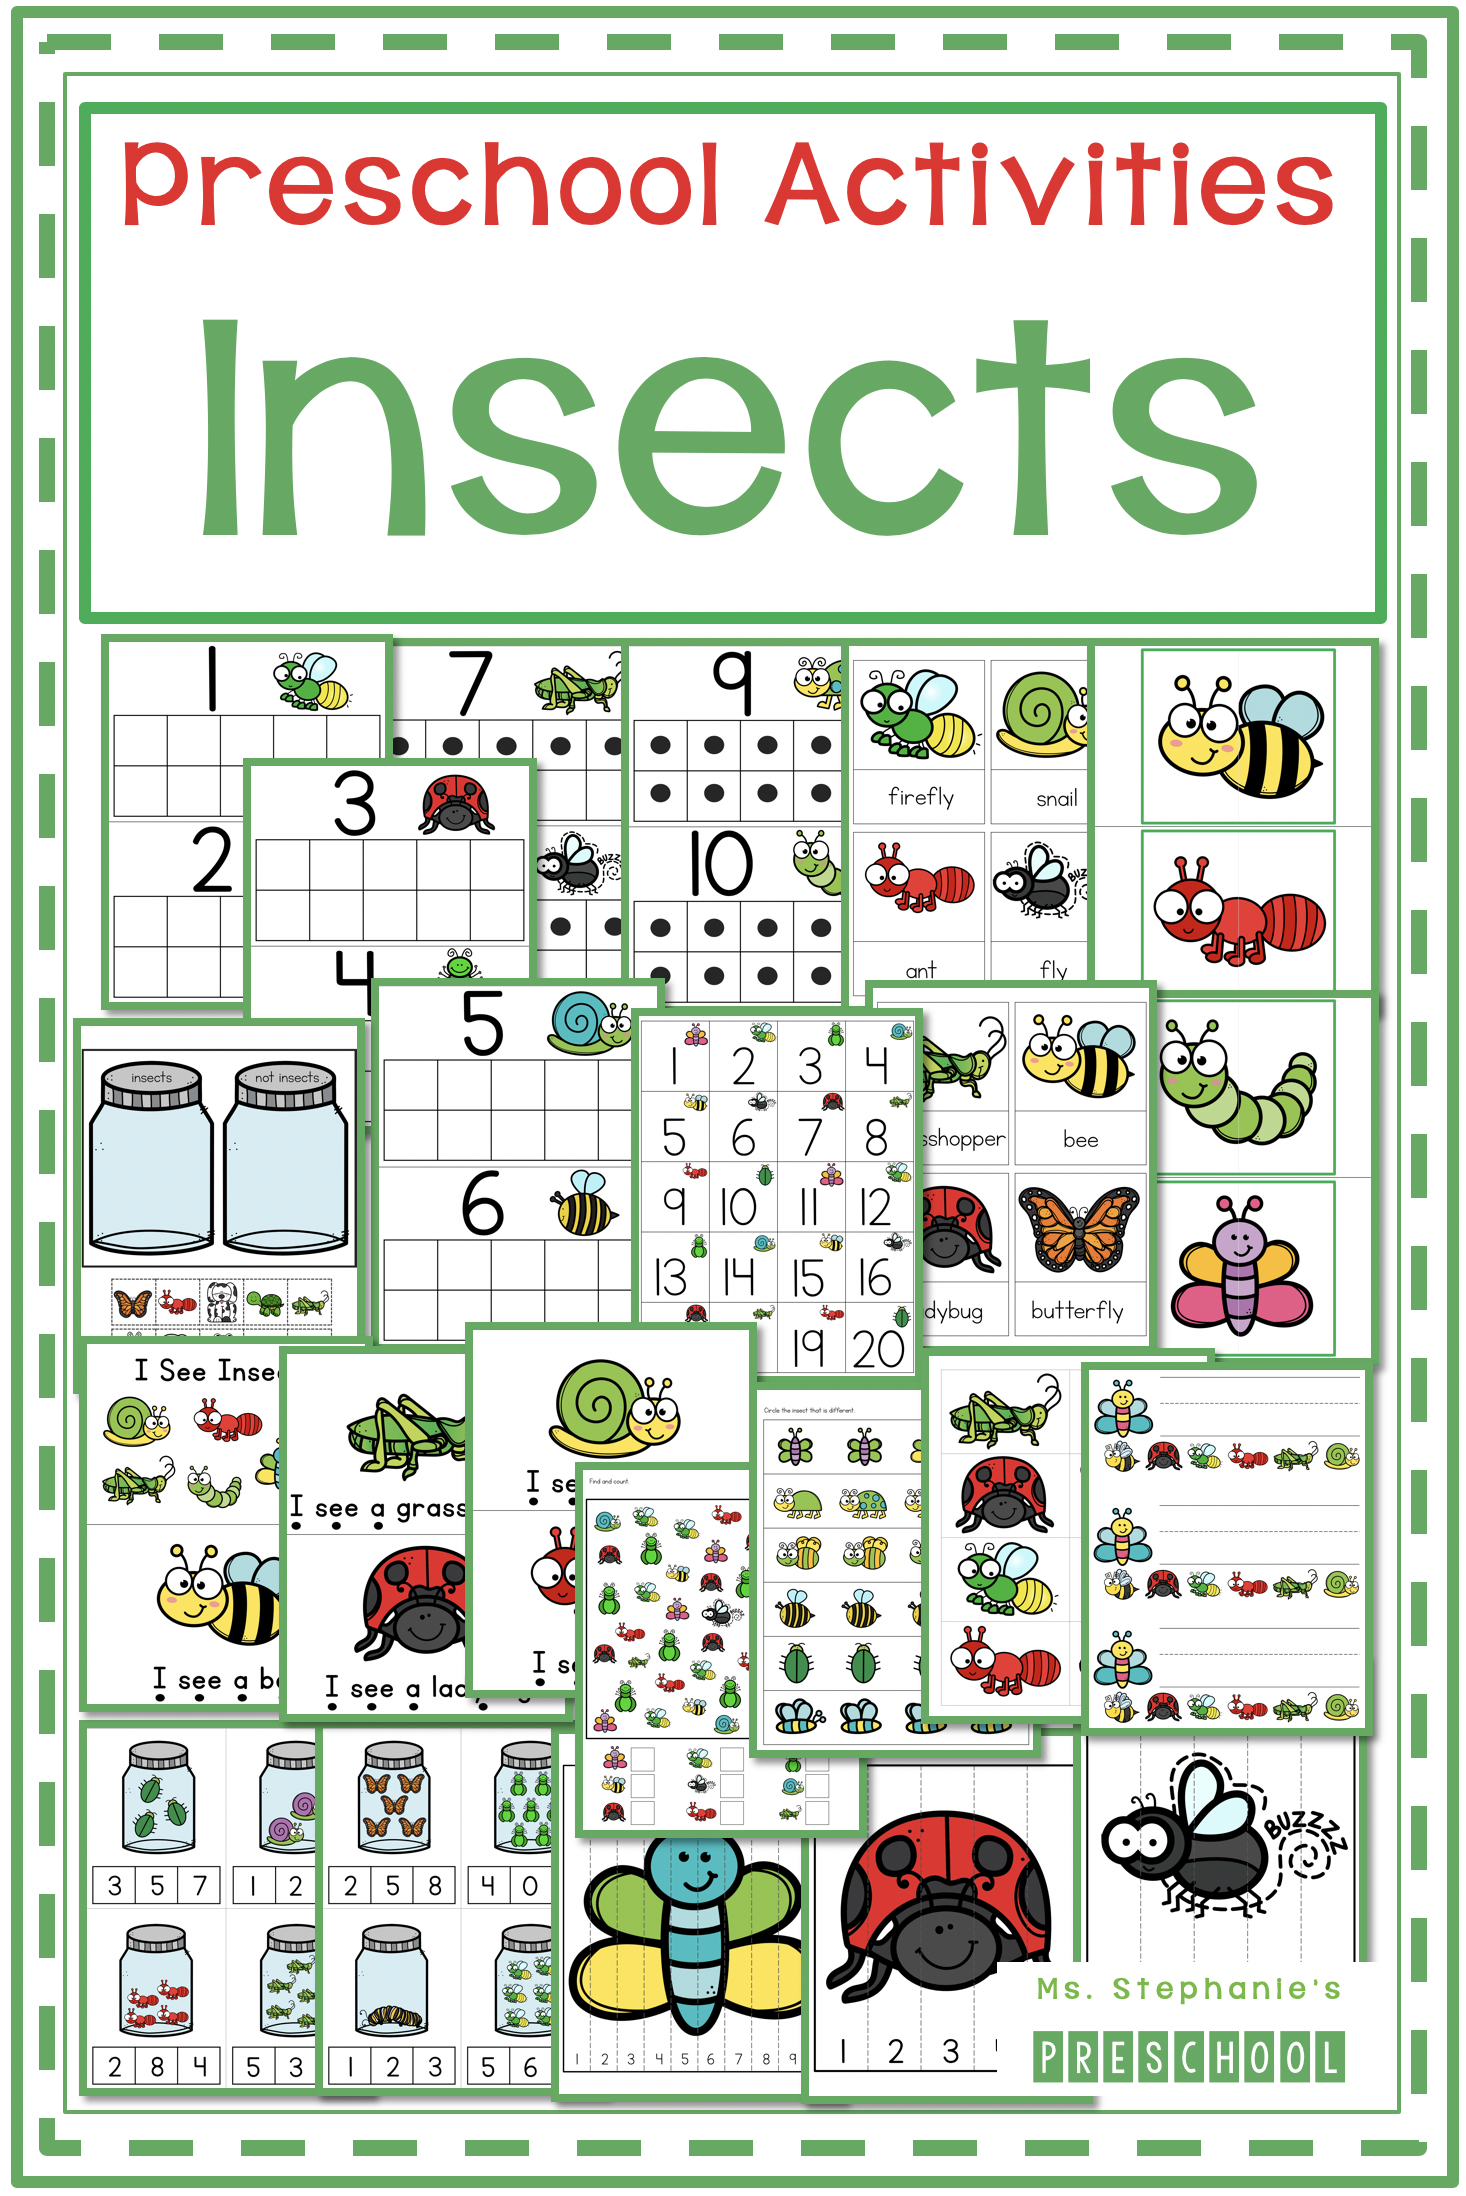 Insect Activities for the Preschool Classroom - Ms. Stephanie's Preschool